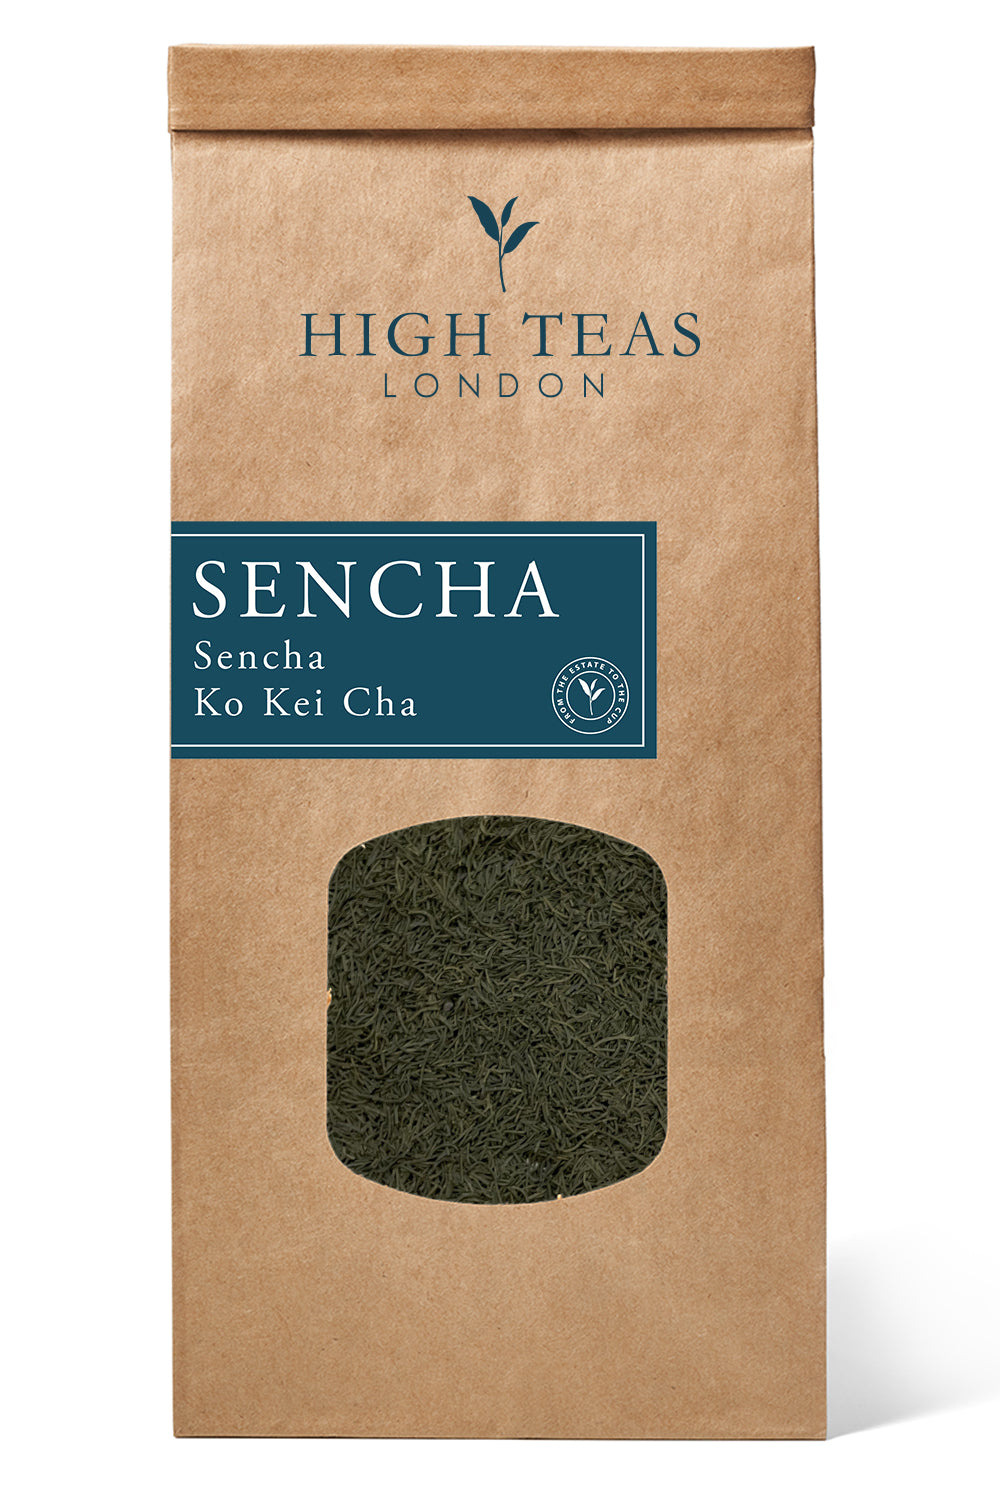 Sencha Ko Kei Cha "Special"-250g-Loose Leaf Tea-High Teas